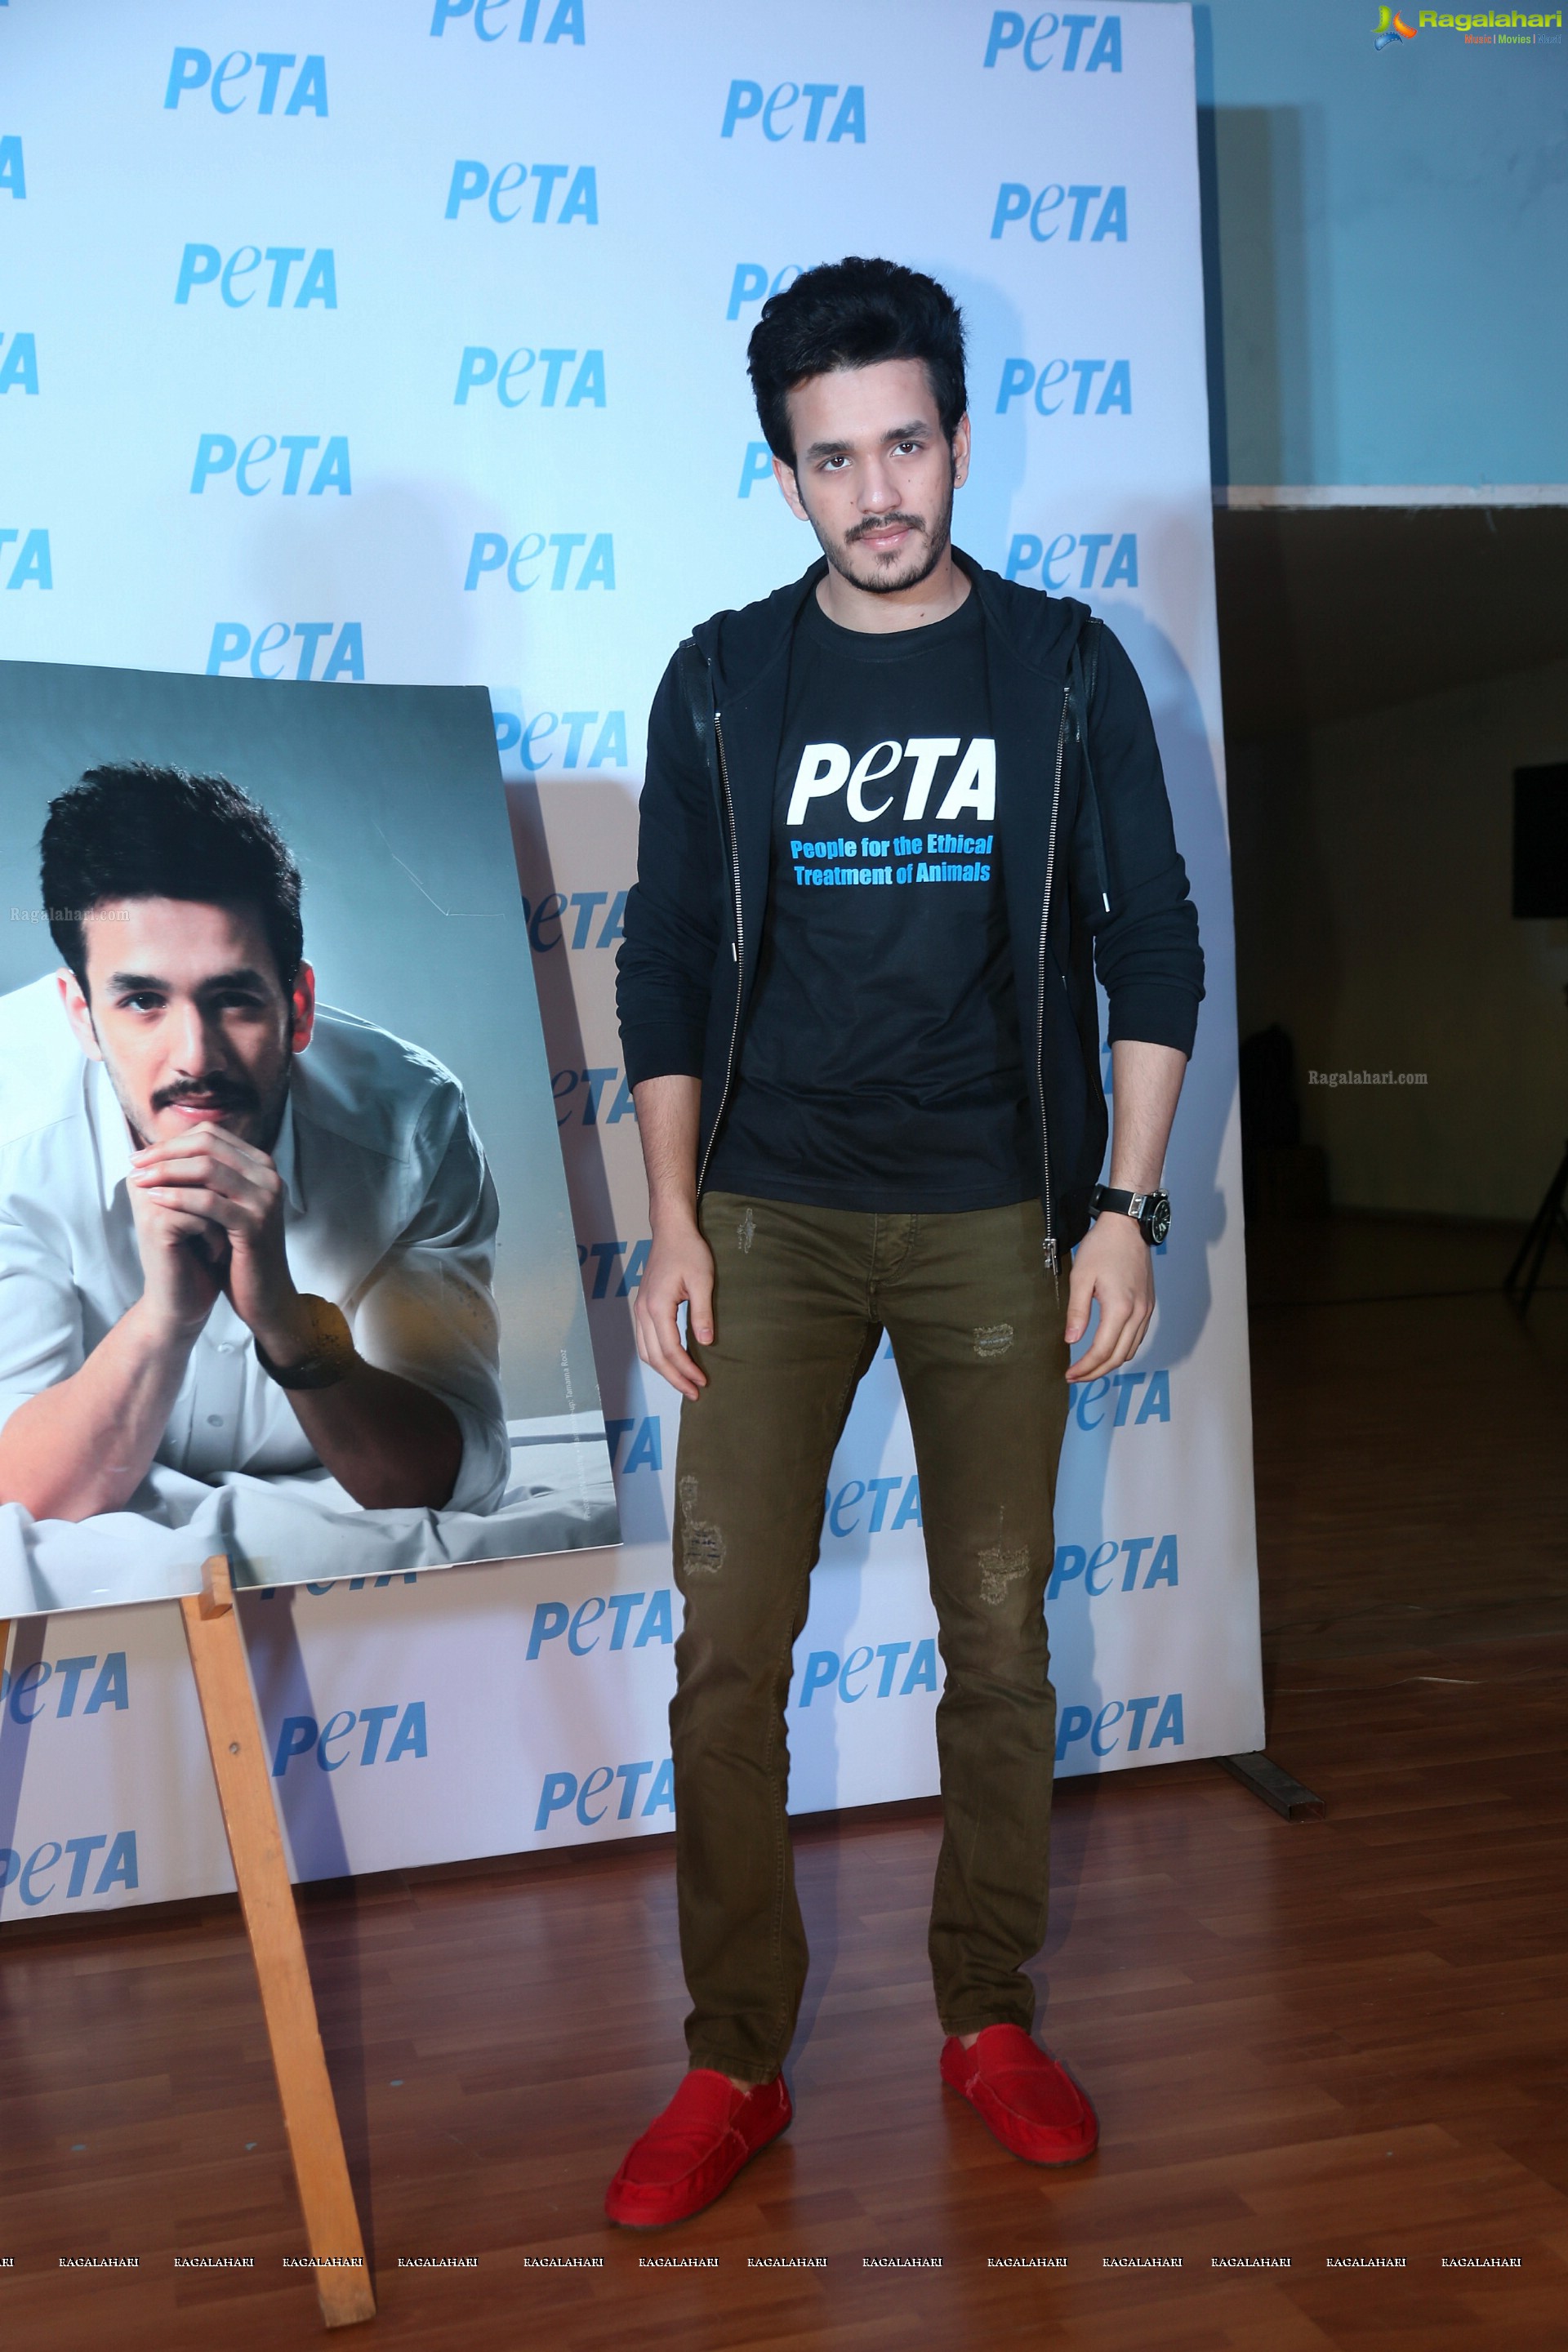 PETA New Adoption Campaign Launch by Akhil Akkineni at Annapurna 7 Acres, Hyderabad